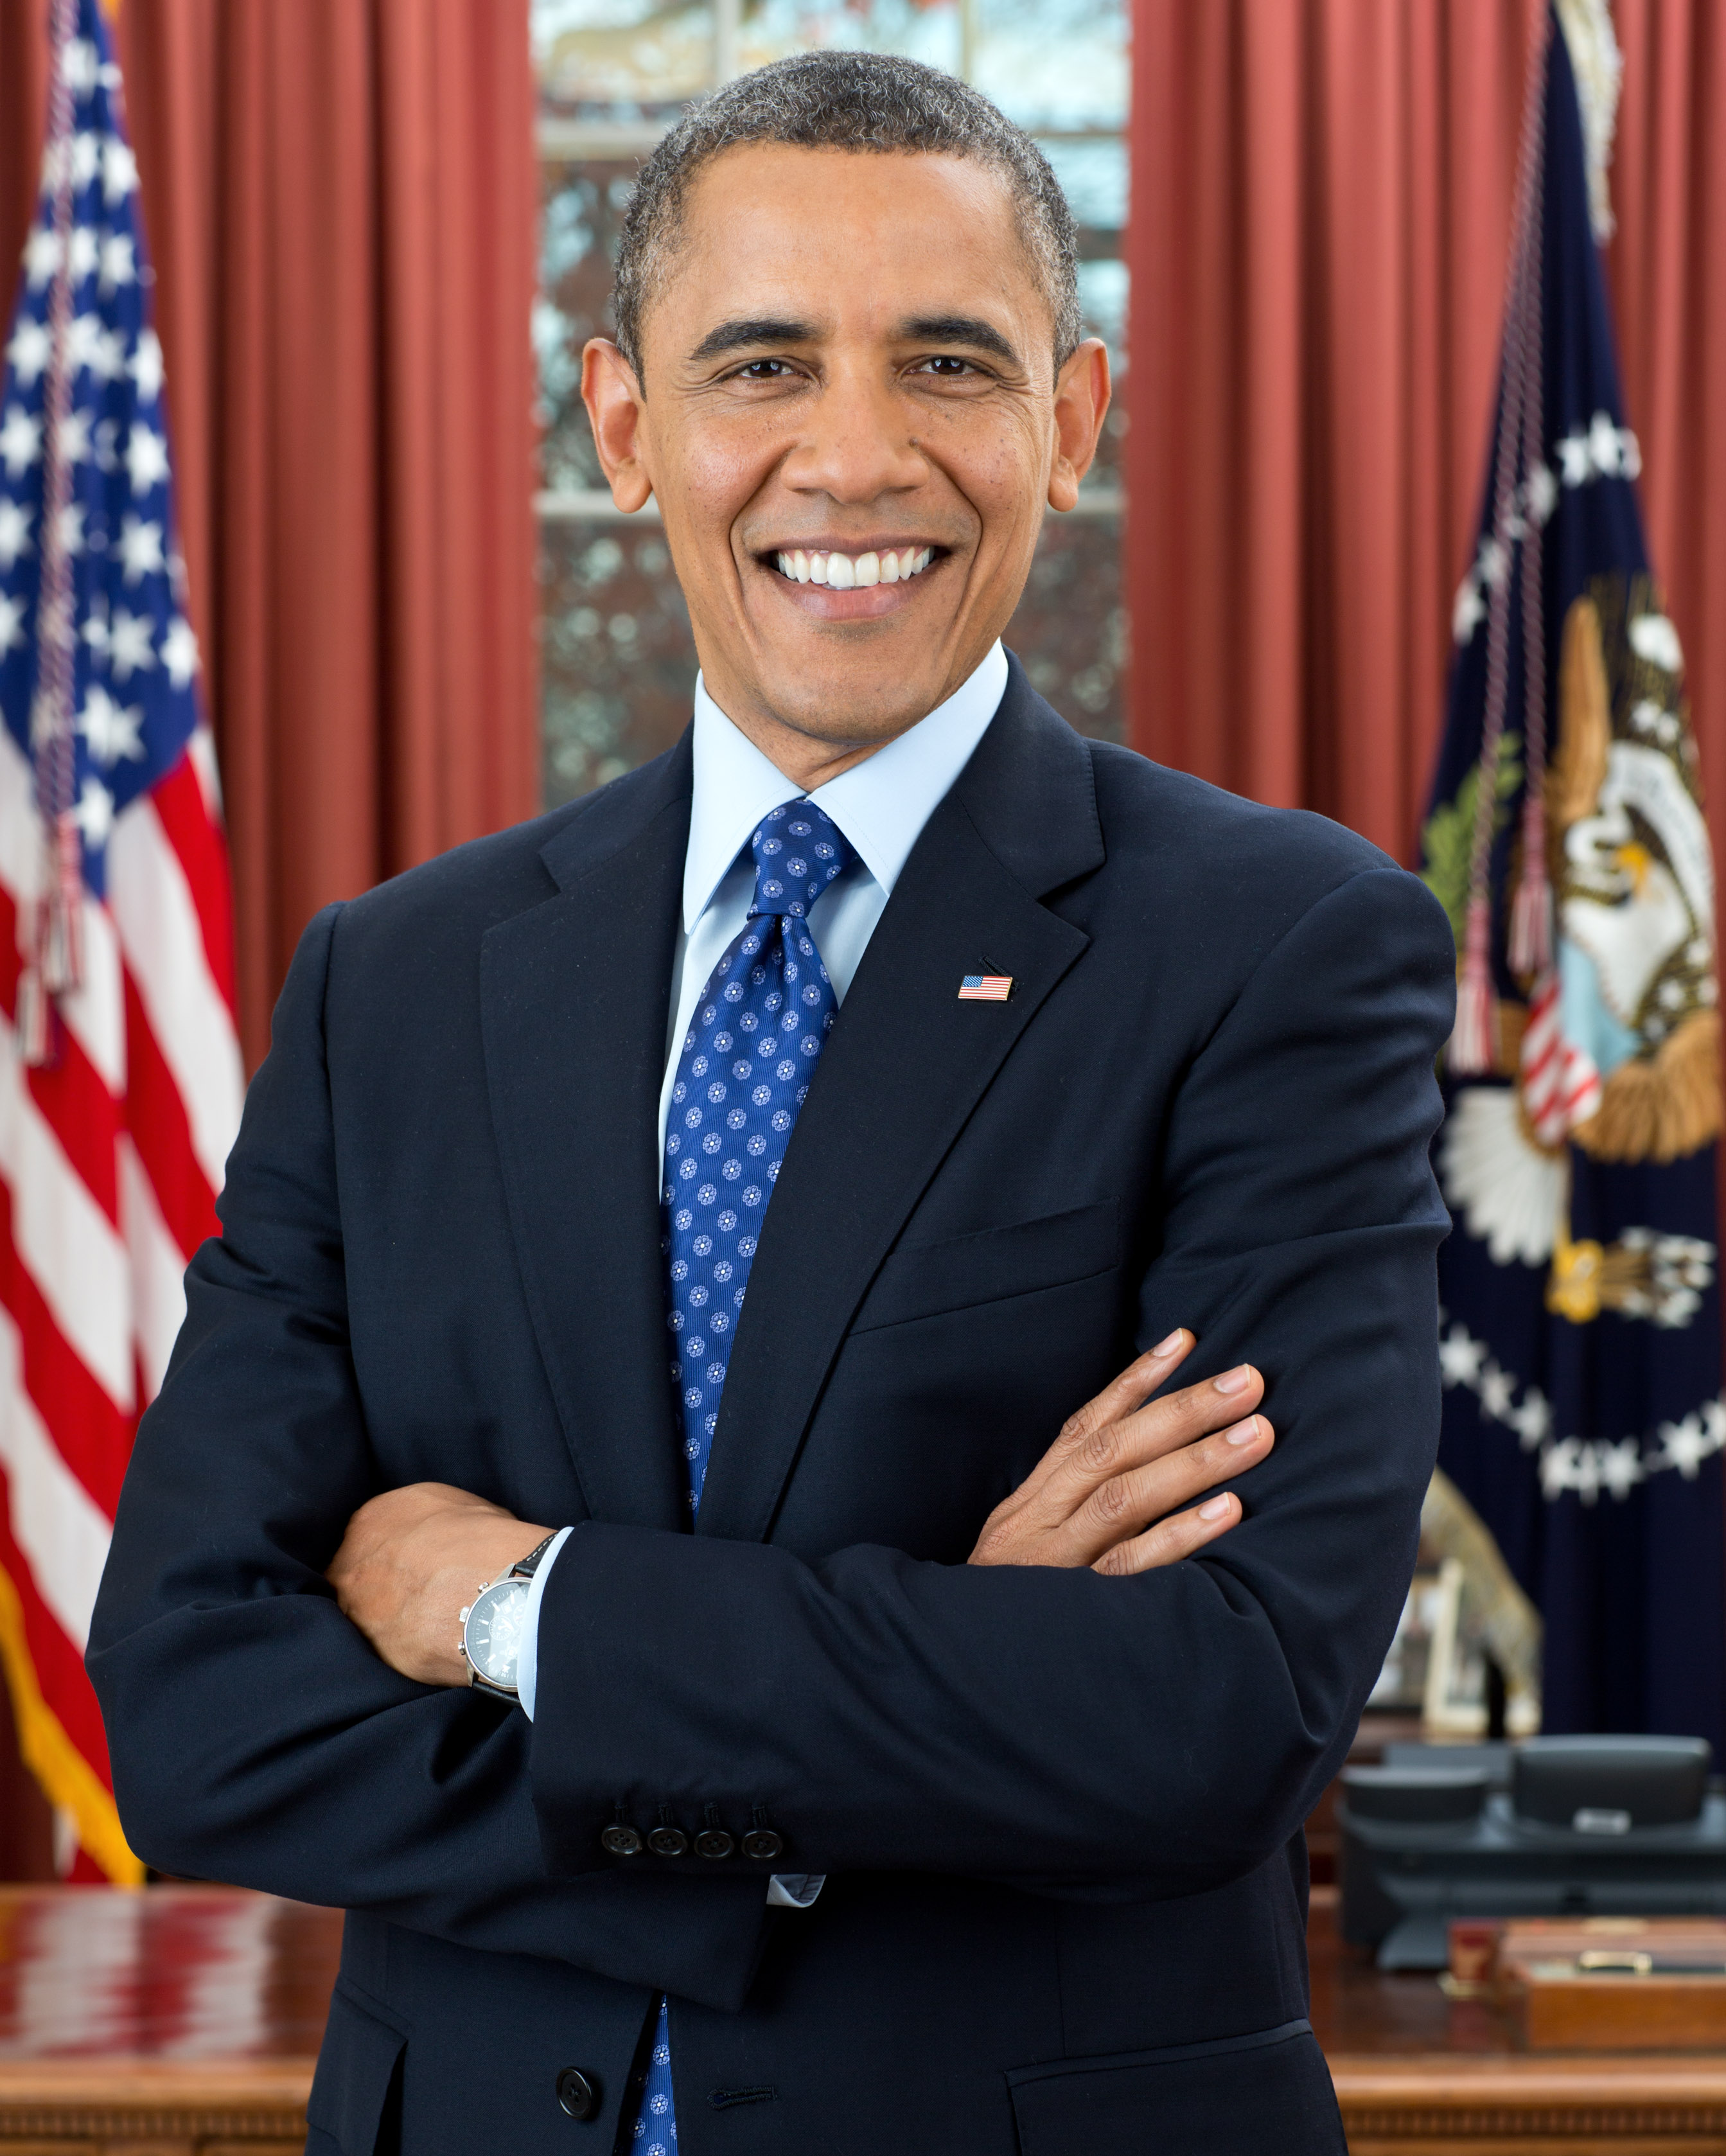 President_Barack_Obama